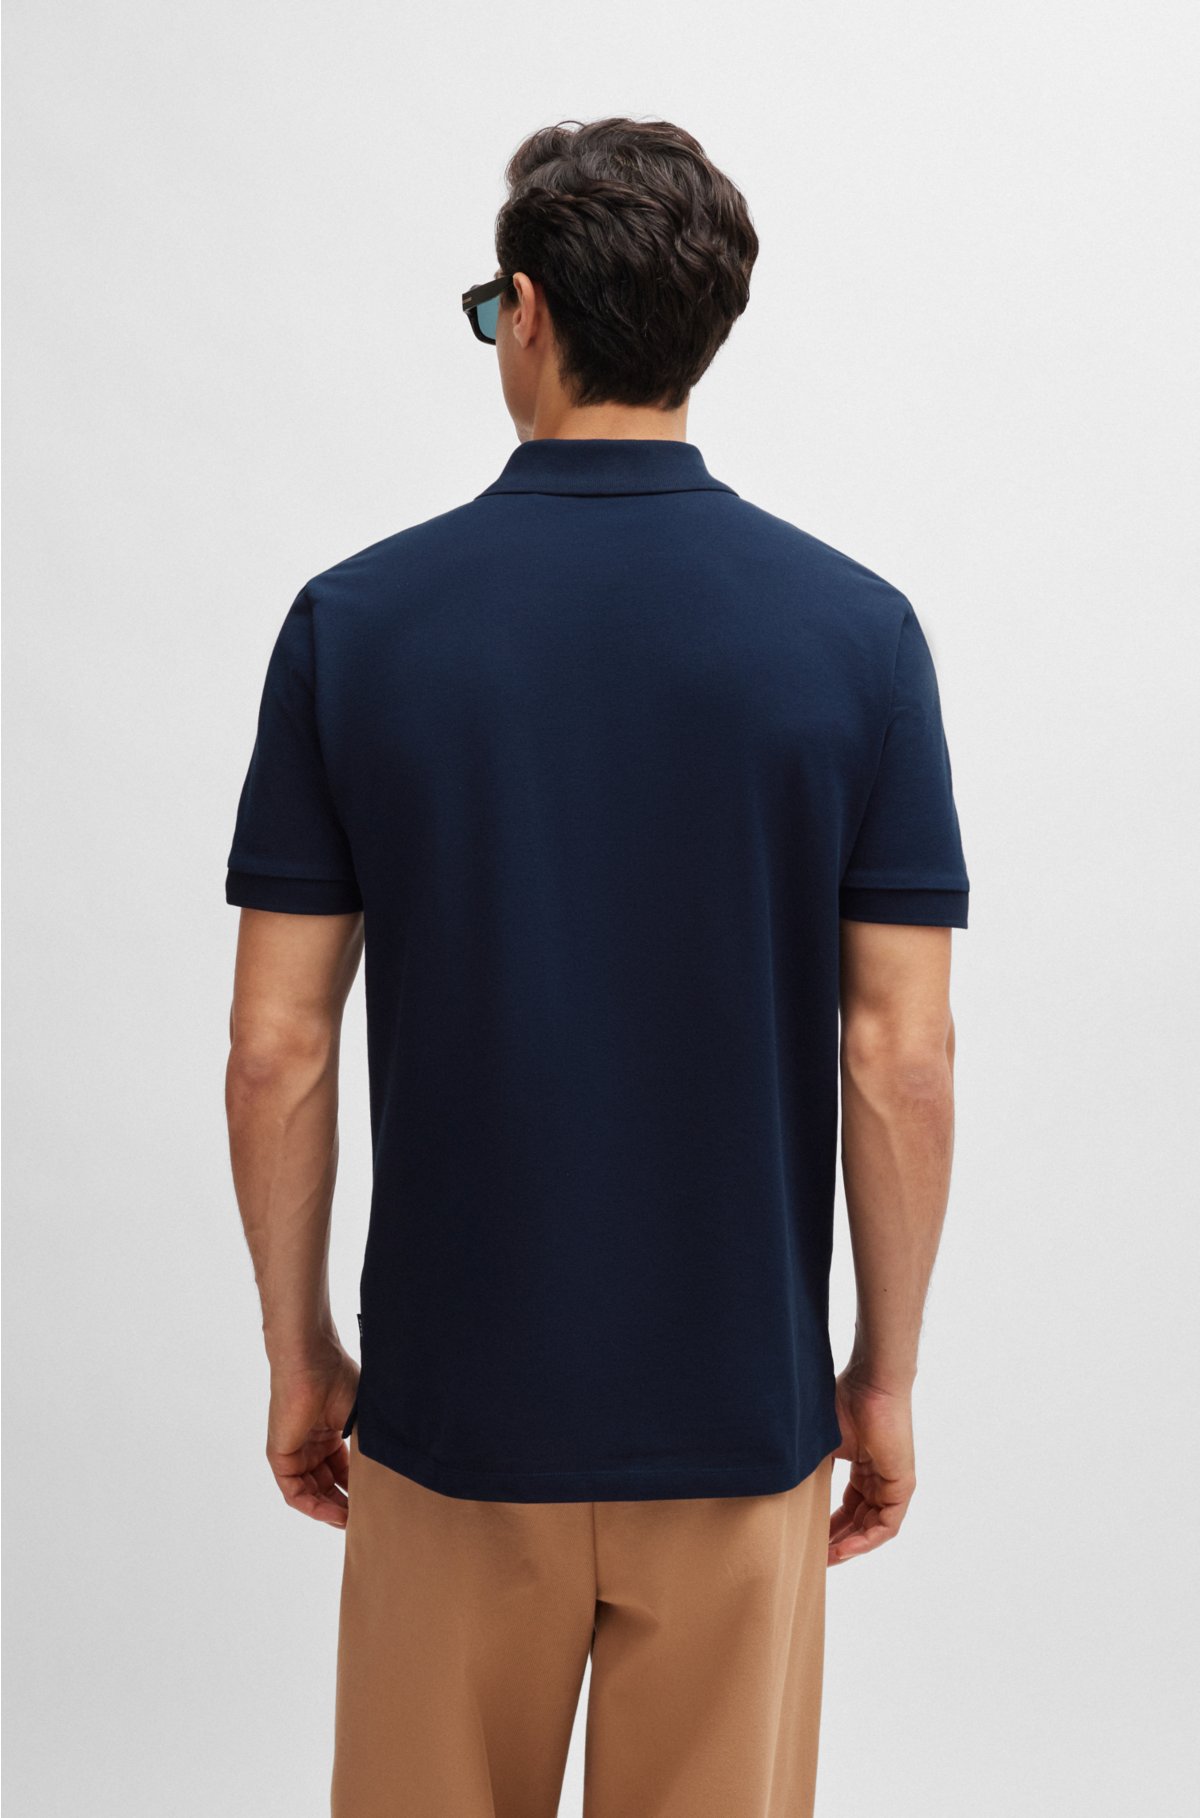 Regular-fit polo shirt in cotton piqué, Dark Blue